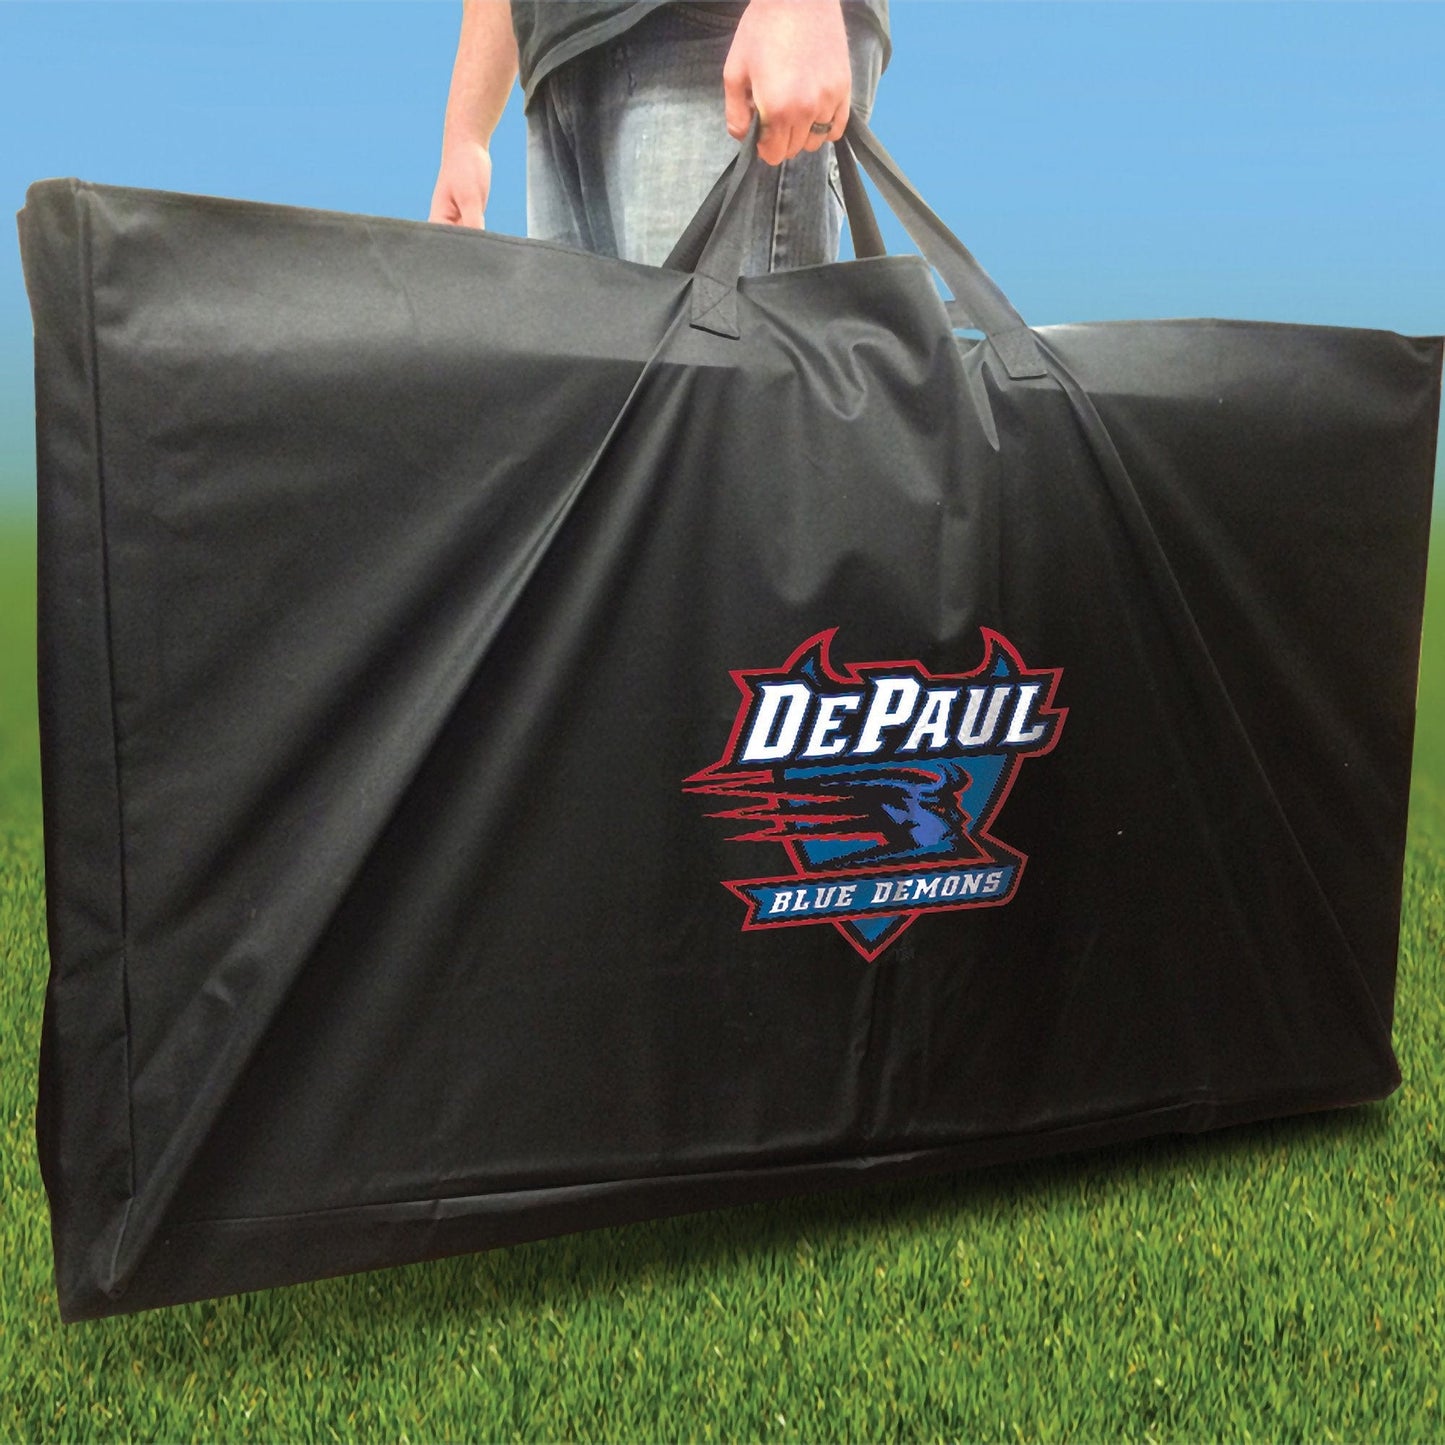 DePaul Stripe team logo carrying case